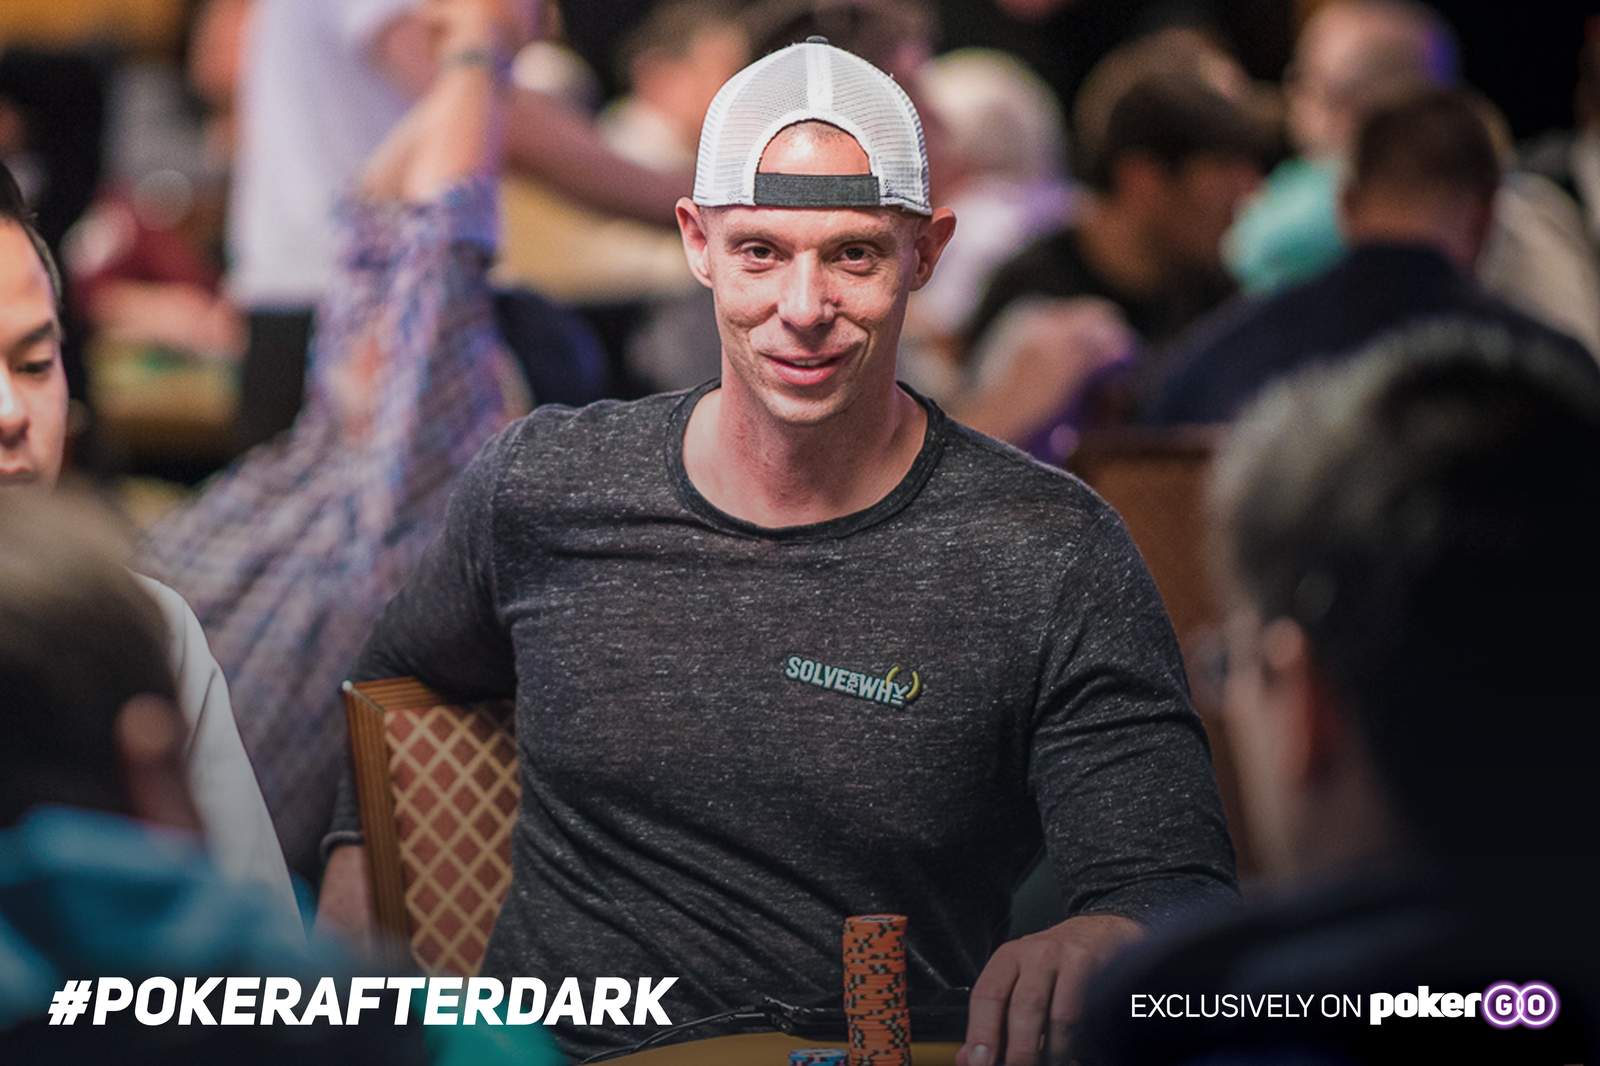 "Poker After Dark" is Back with Berkey & Hybrid Action